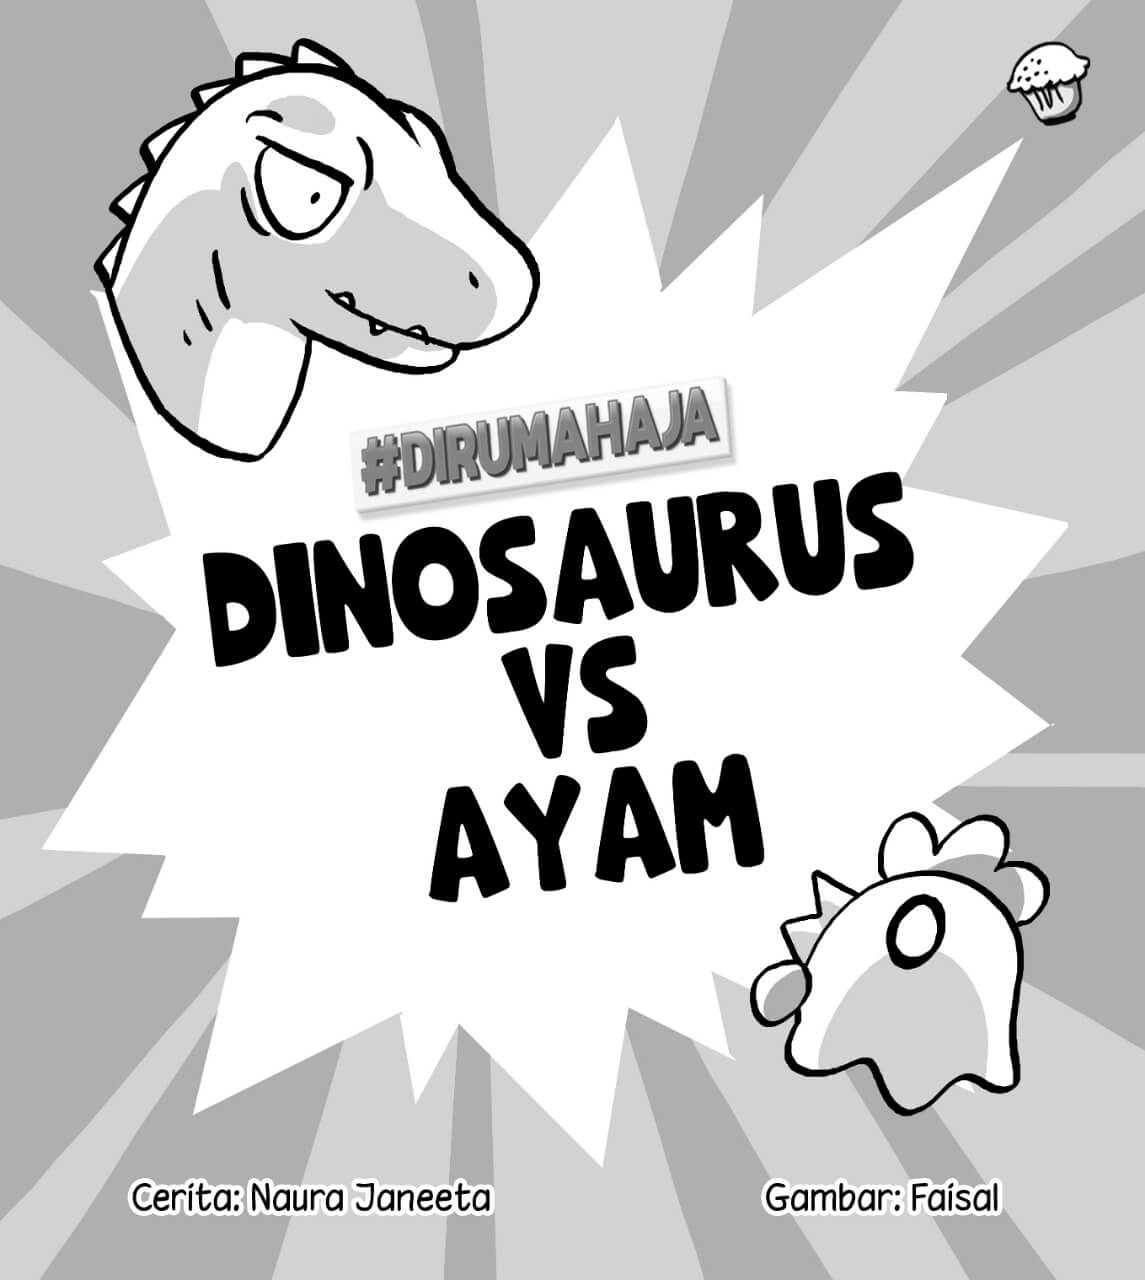 Dinosaurus vs ayam cover BW